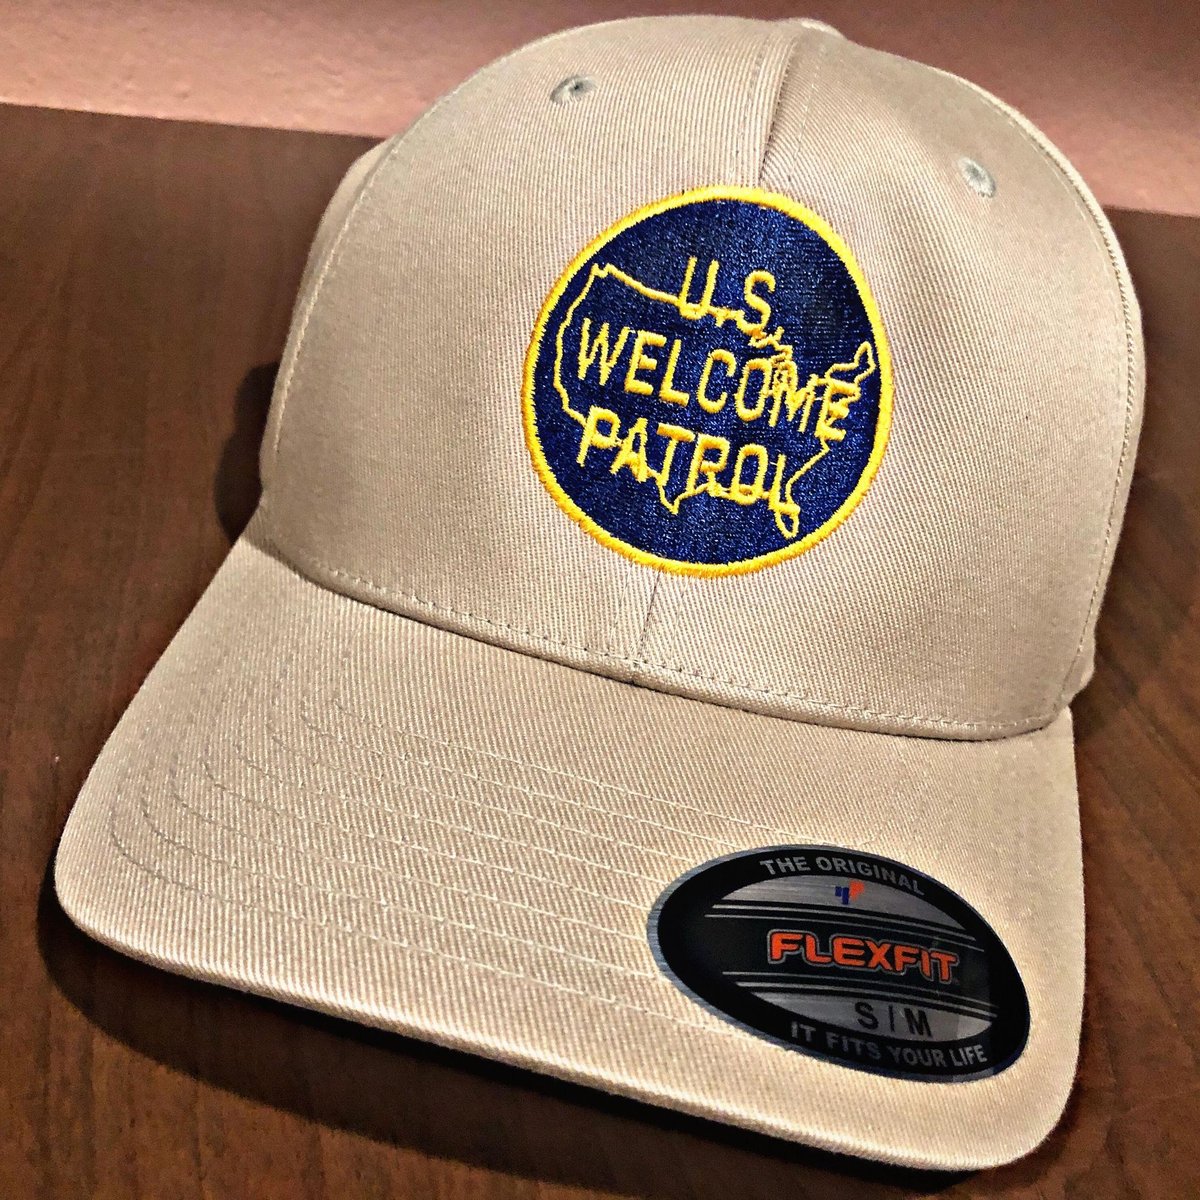 Image of U.S. WELCOME PATROL ~ FLEXFIT CAPS